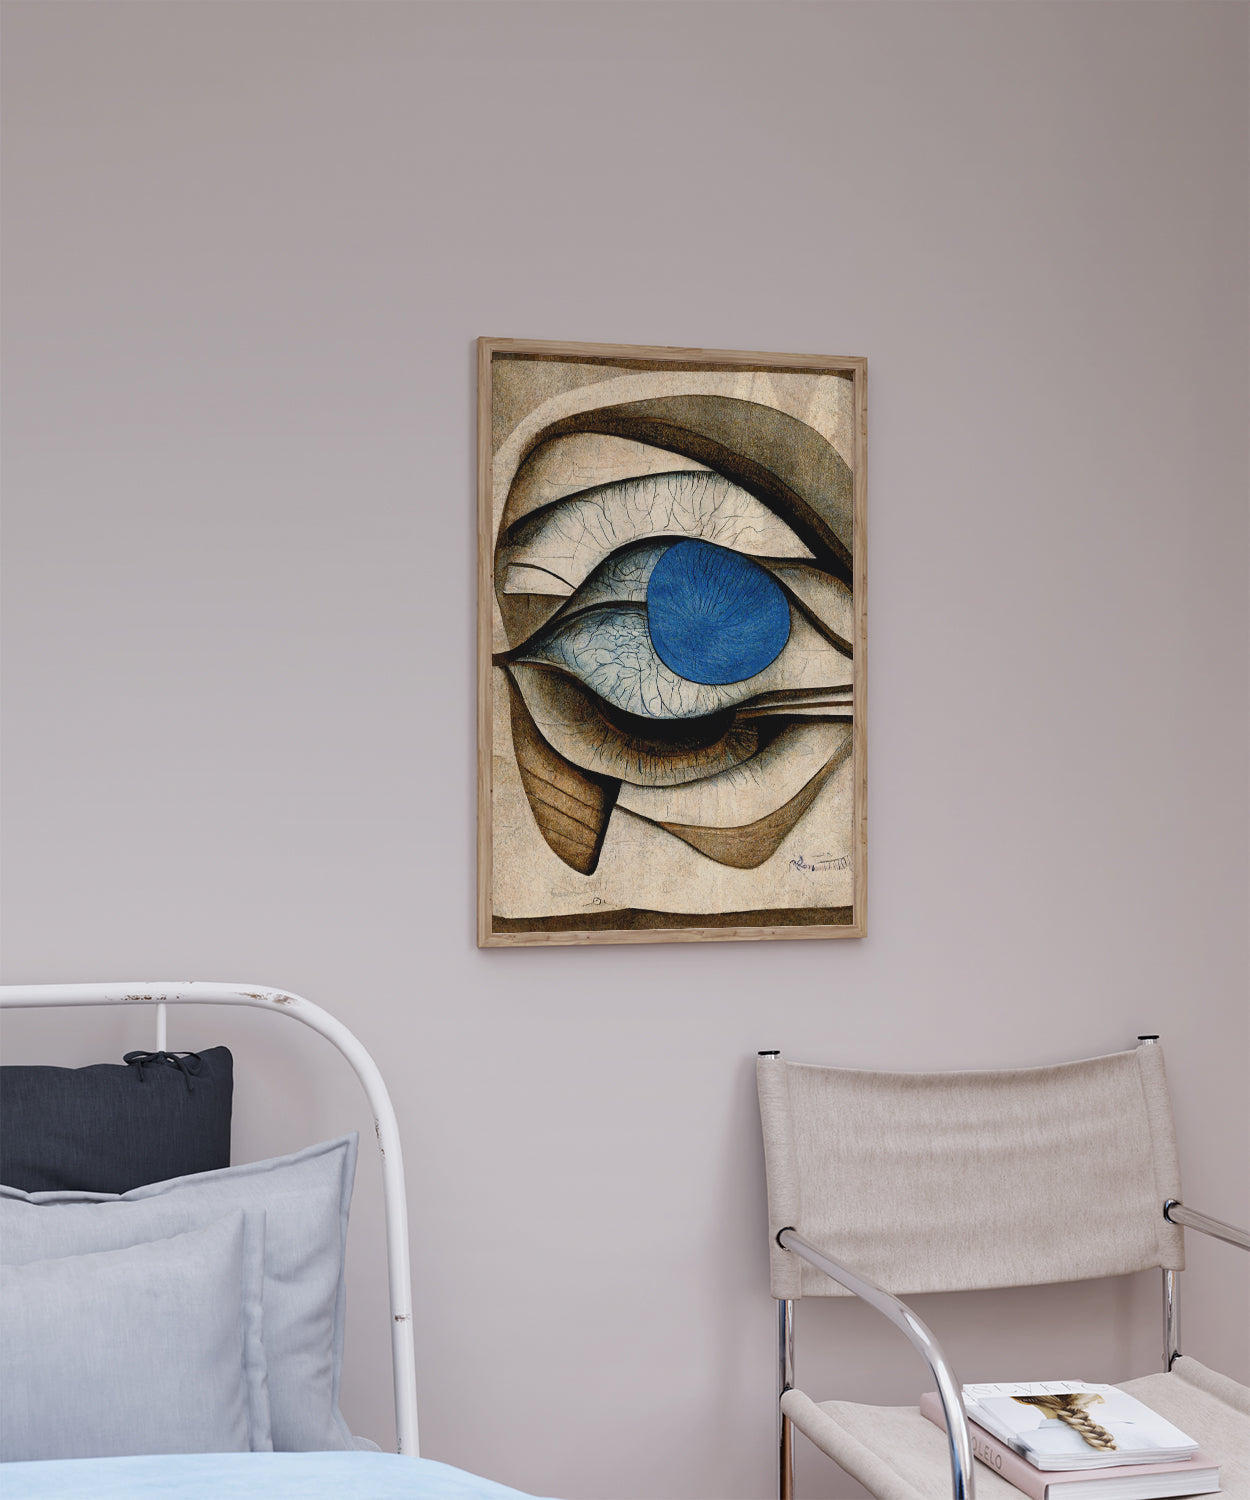 Eye Anatomy Artwork - Geometric illustration showcasing the intricate anatomy of the eye in a visually captivating artwork.